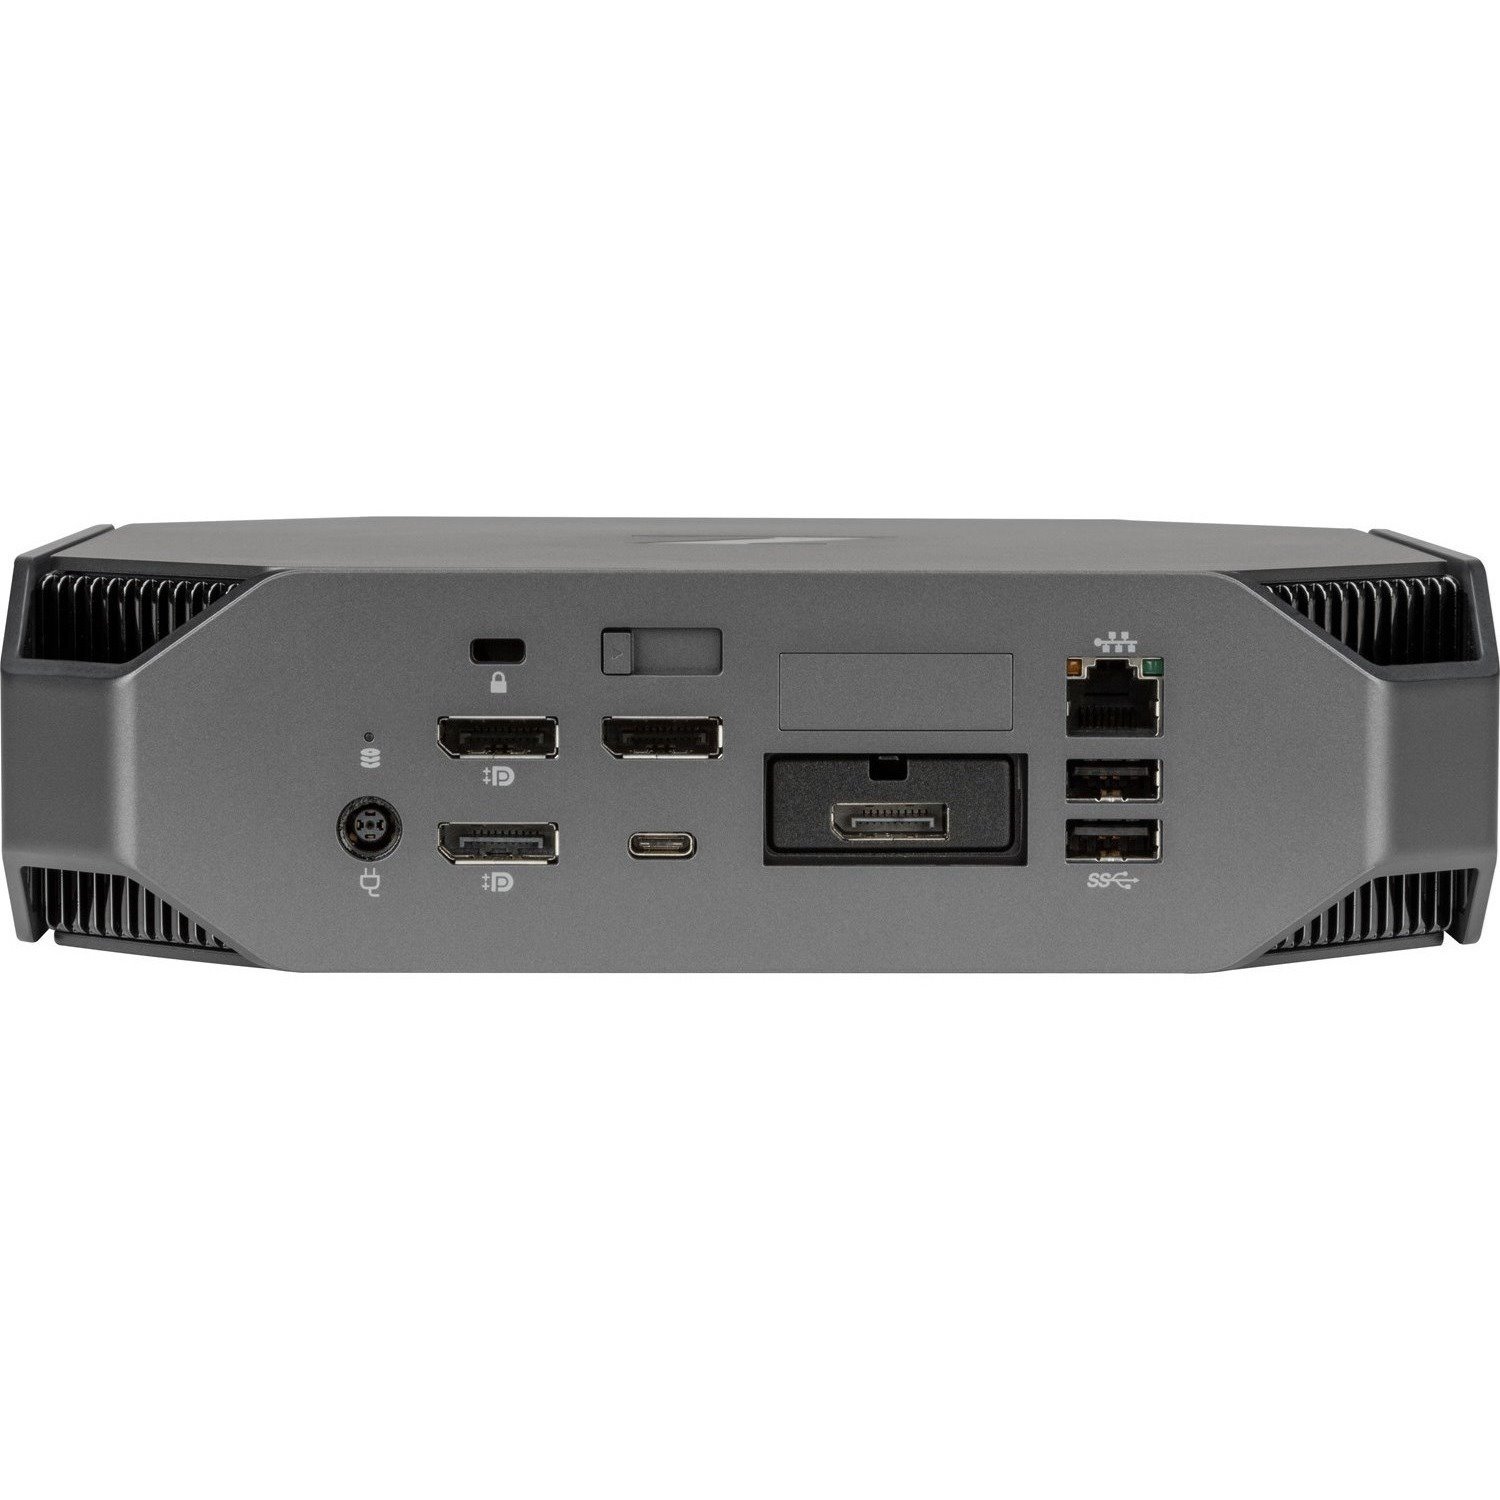 HP Z2 Mini G4 Workstation - 1 x Intel Core i7 9th Gen i7-9700 - 8 GB - 256 GB SSD - Mini PC - Space Gray, Black Chrome Accent